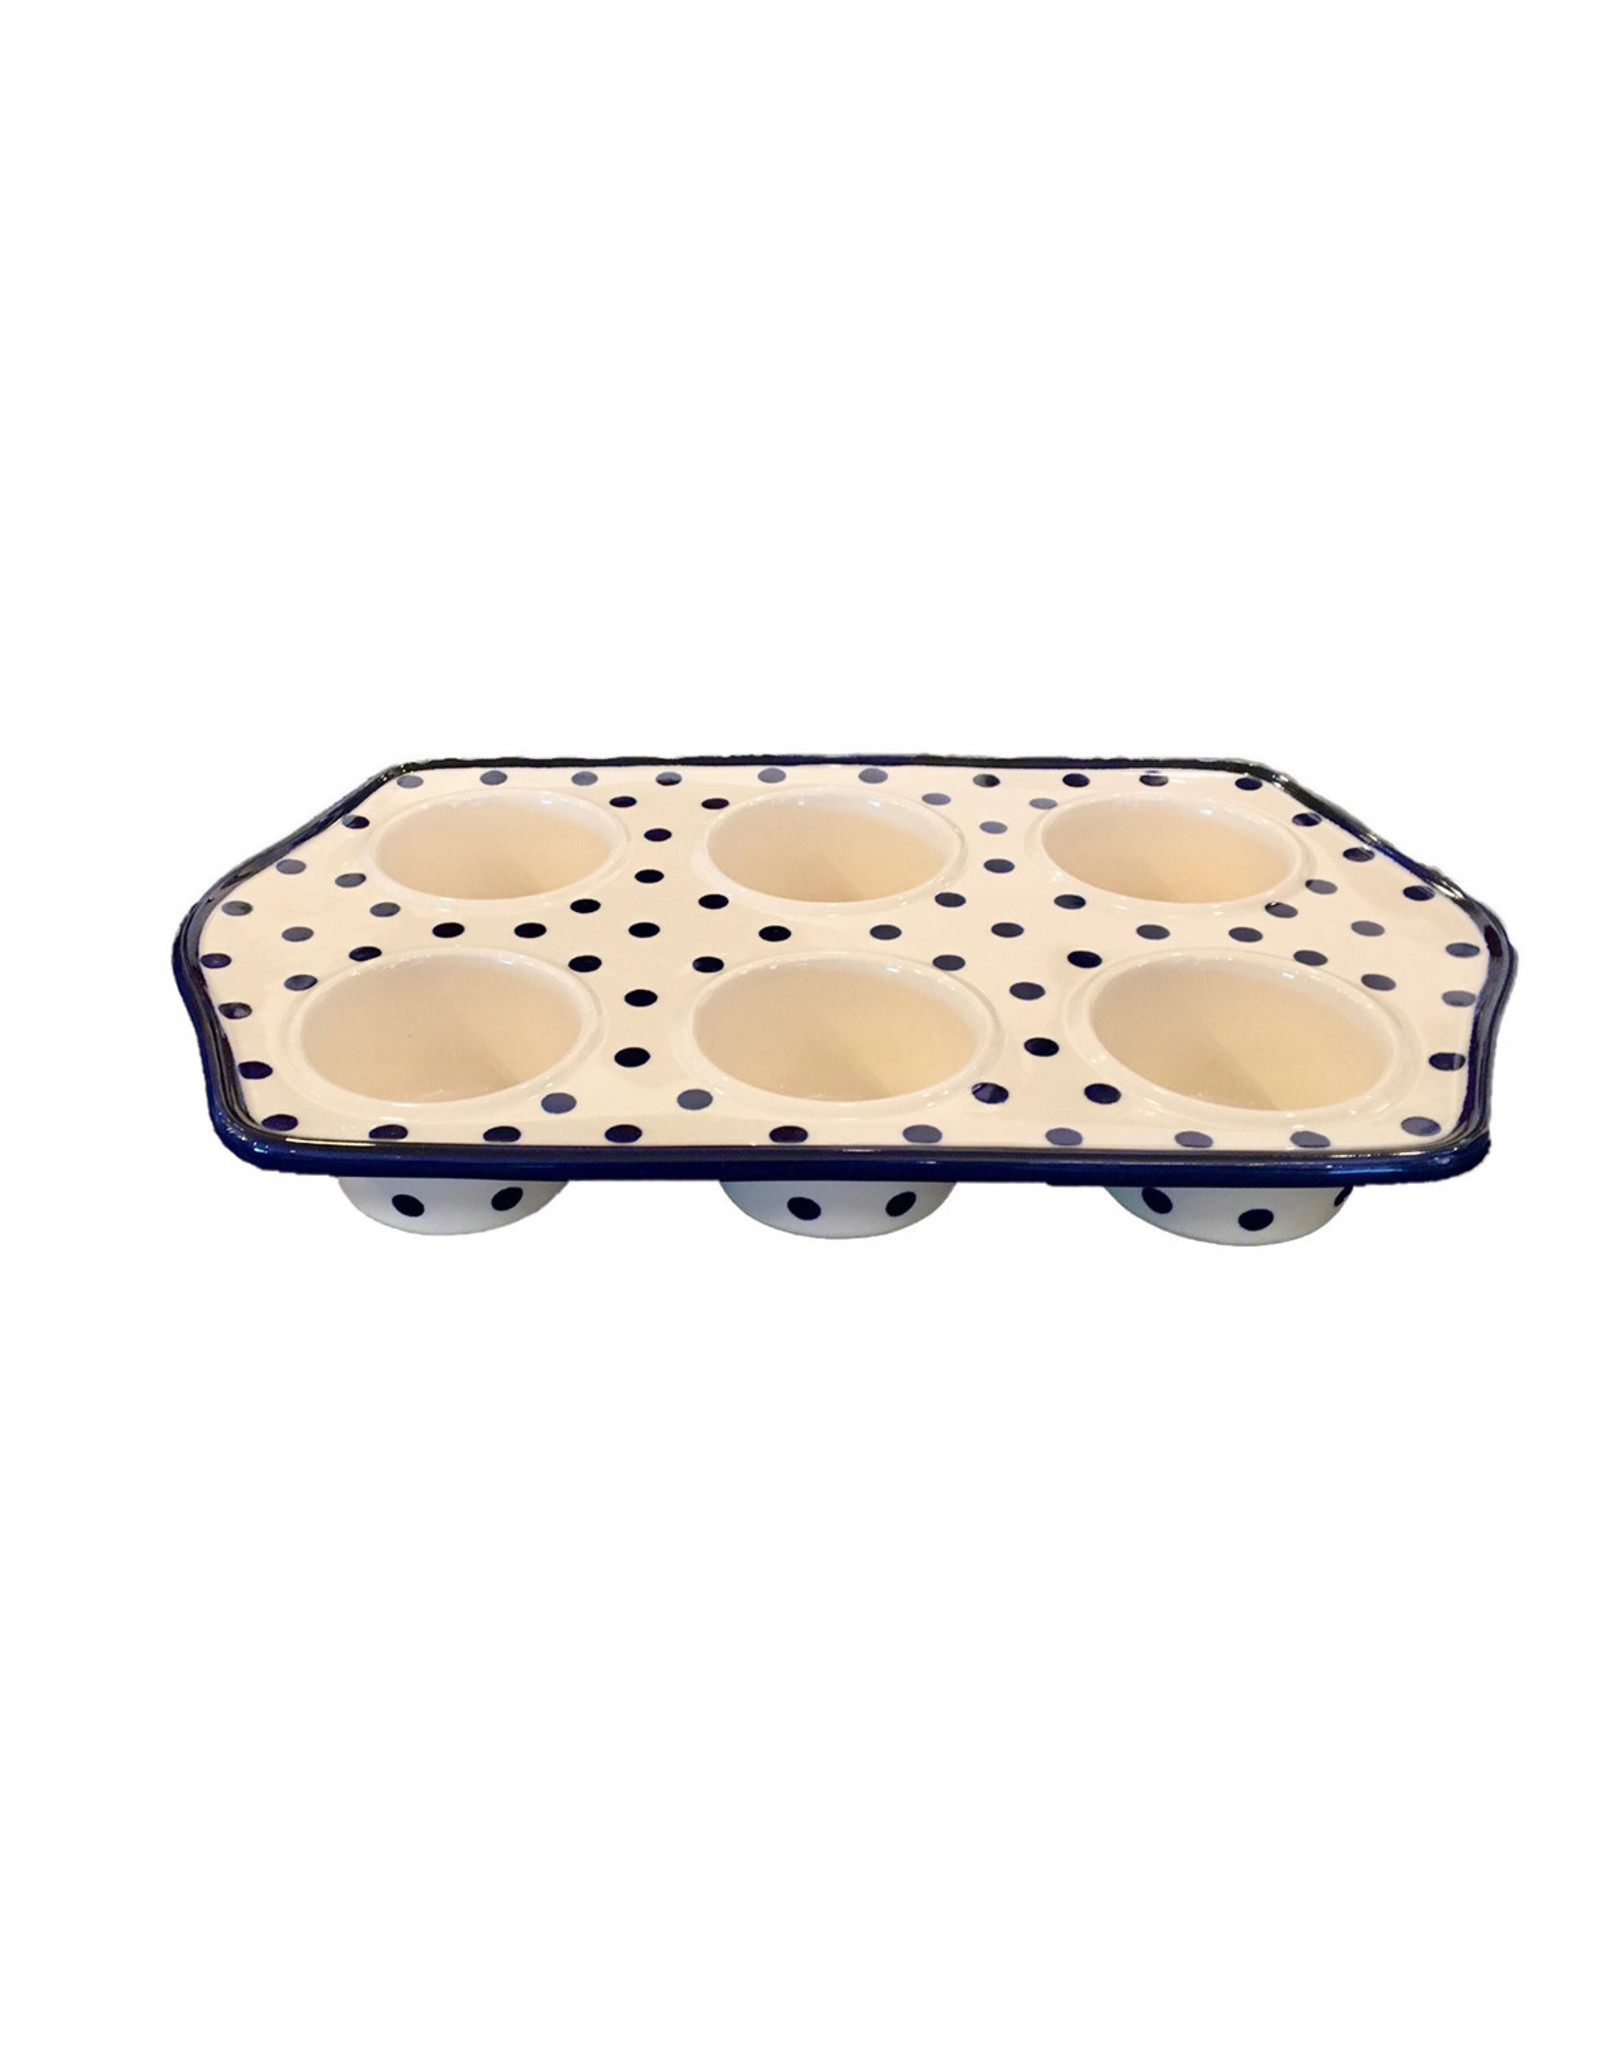 Muffin Pan - Blue/White Dots